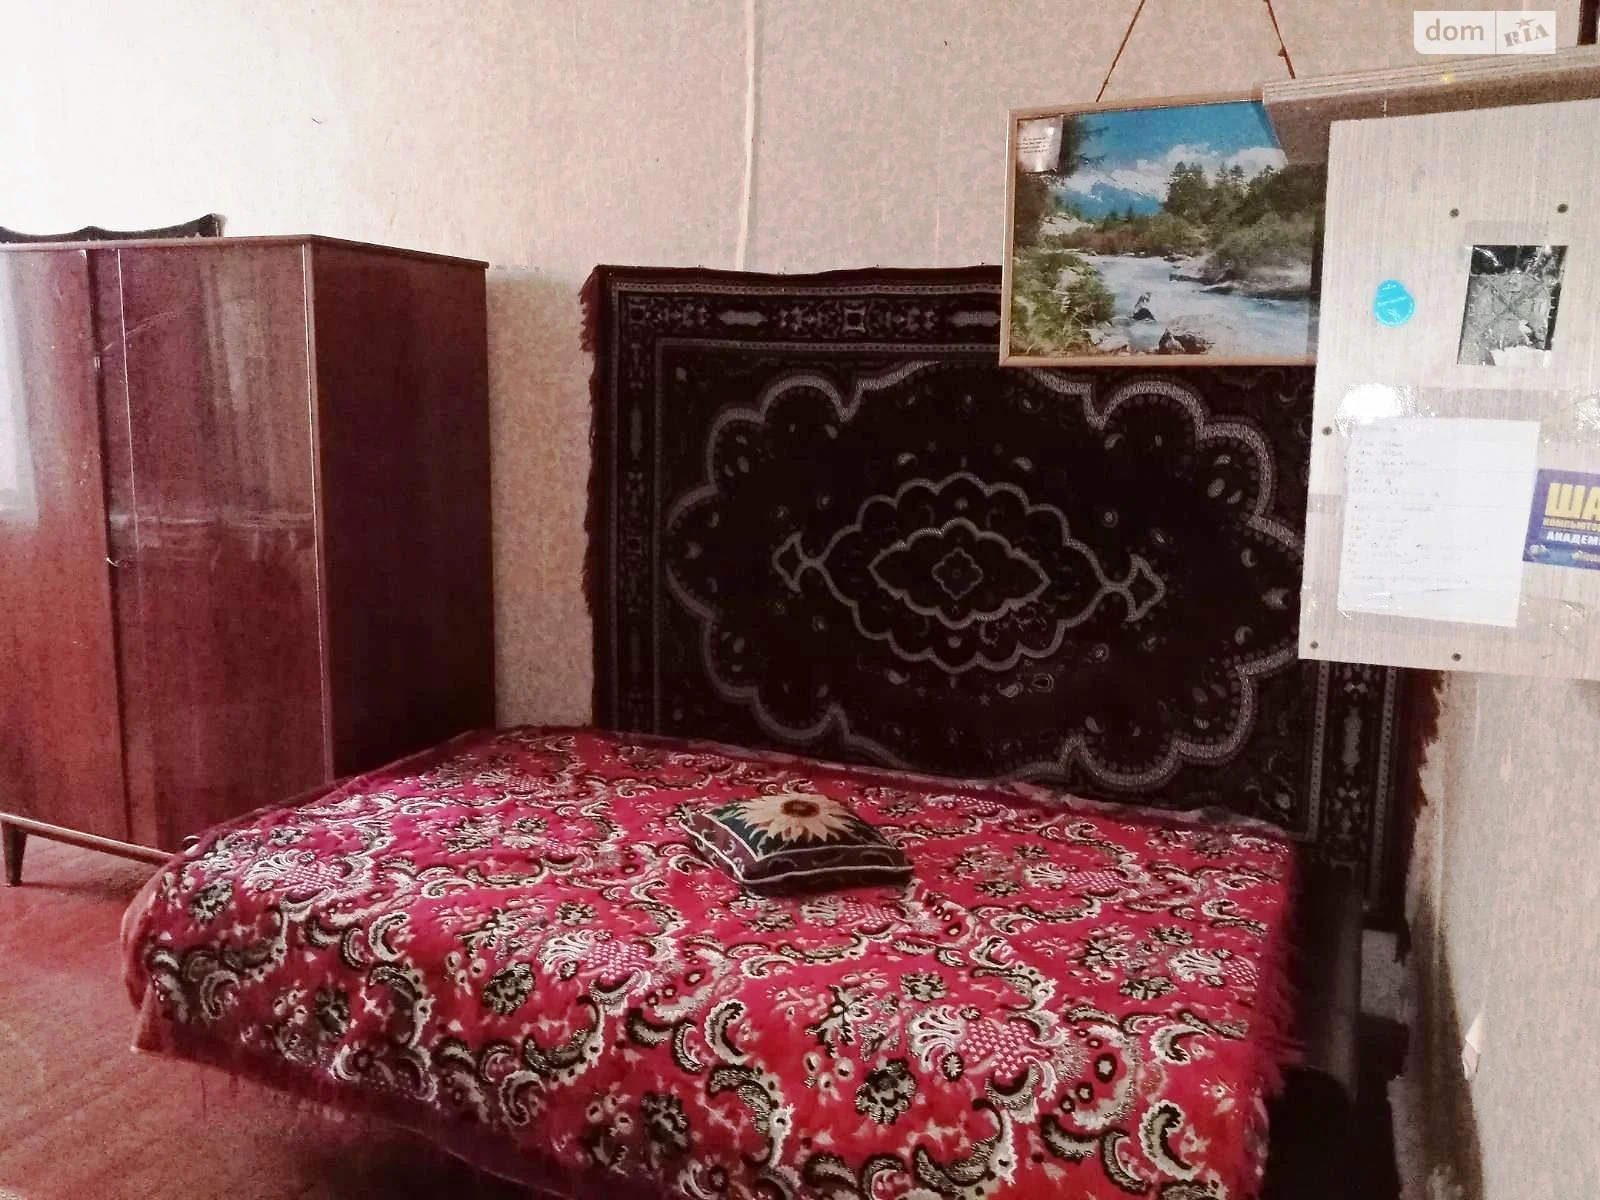 Продается комната 35 кв. м в Одессе, цена: 16000 $ - фото 1